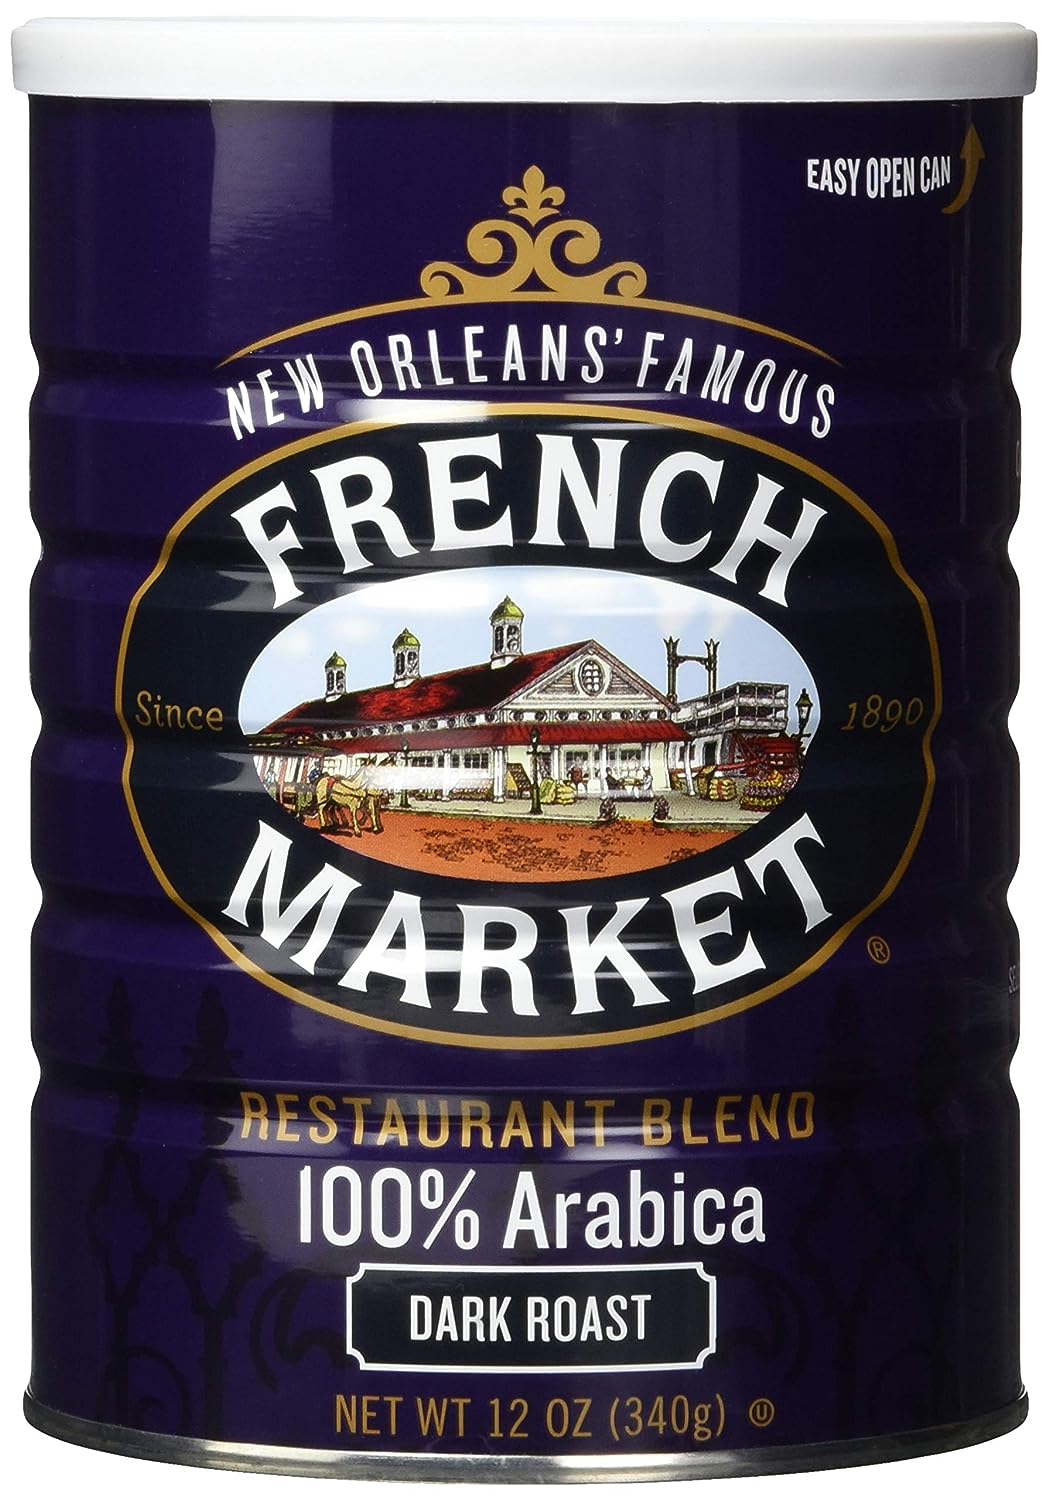 FRENCH MARKET COFFEE Arabica Dark Roast Coffee